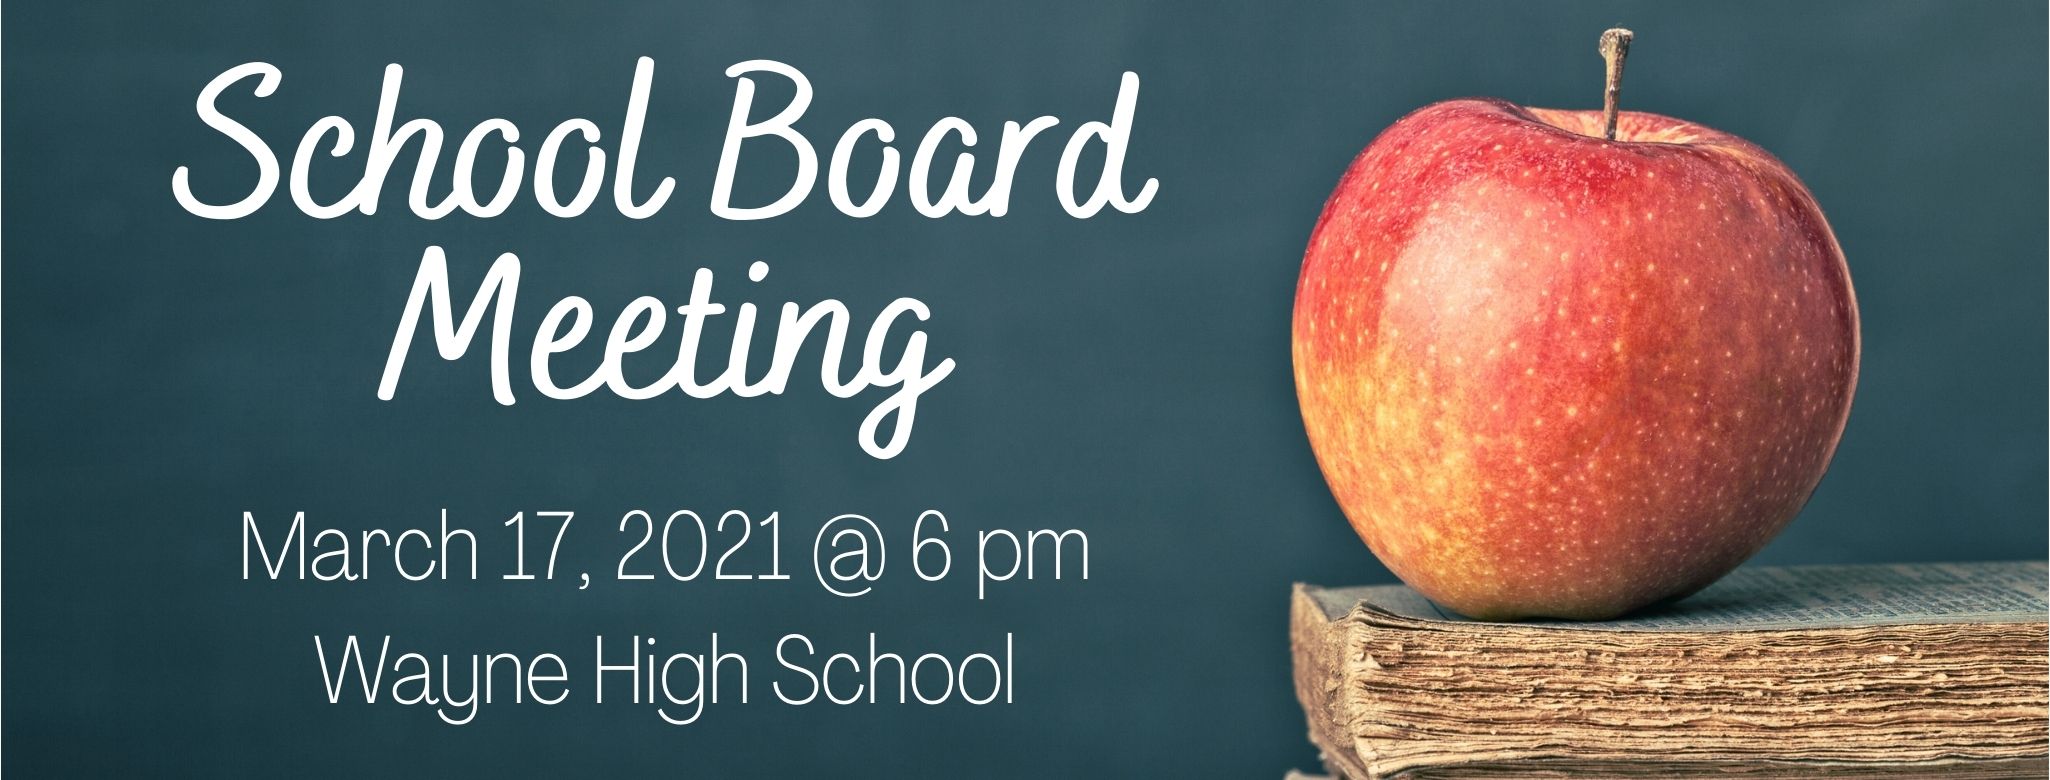 School Board Meeting 5